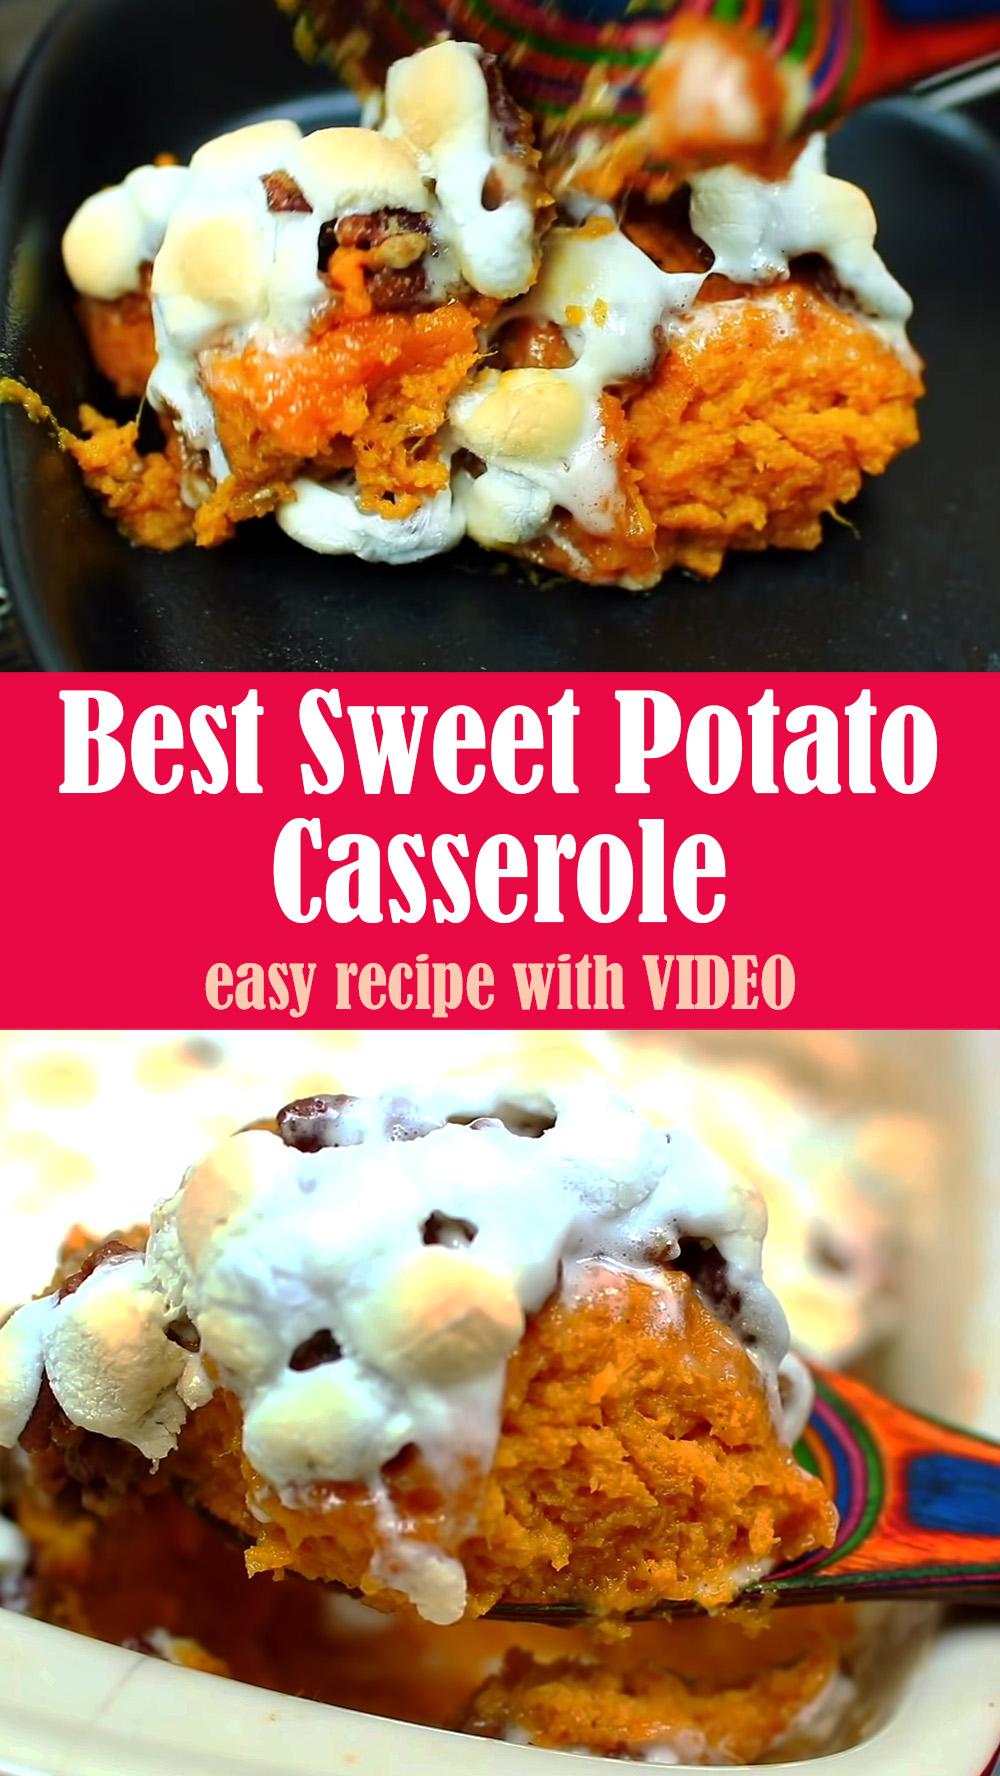 The Best Sweet Potato Casserole